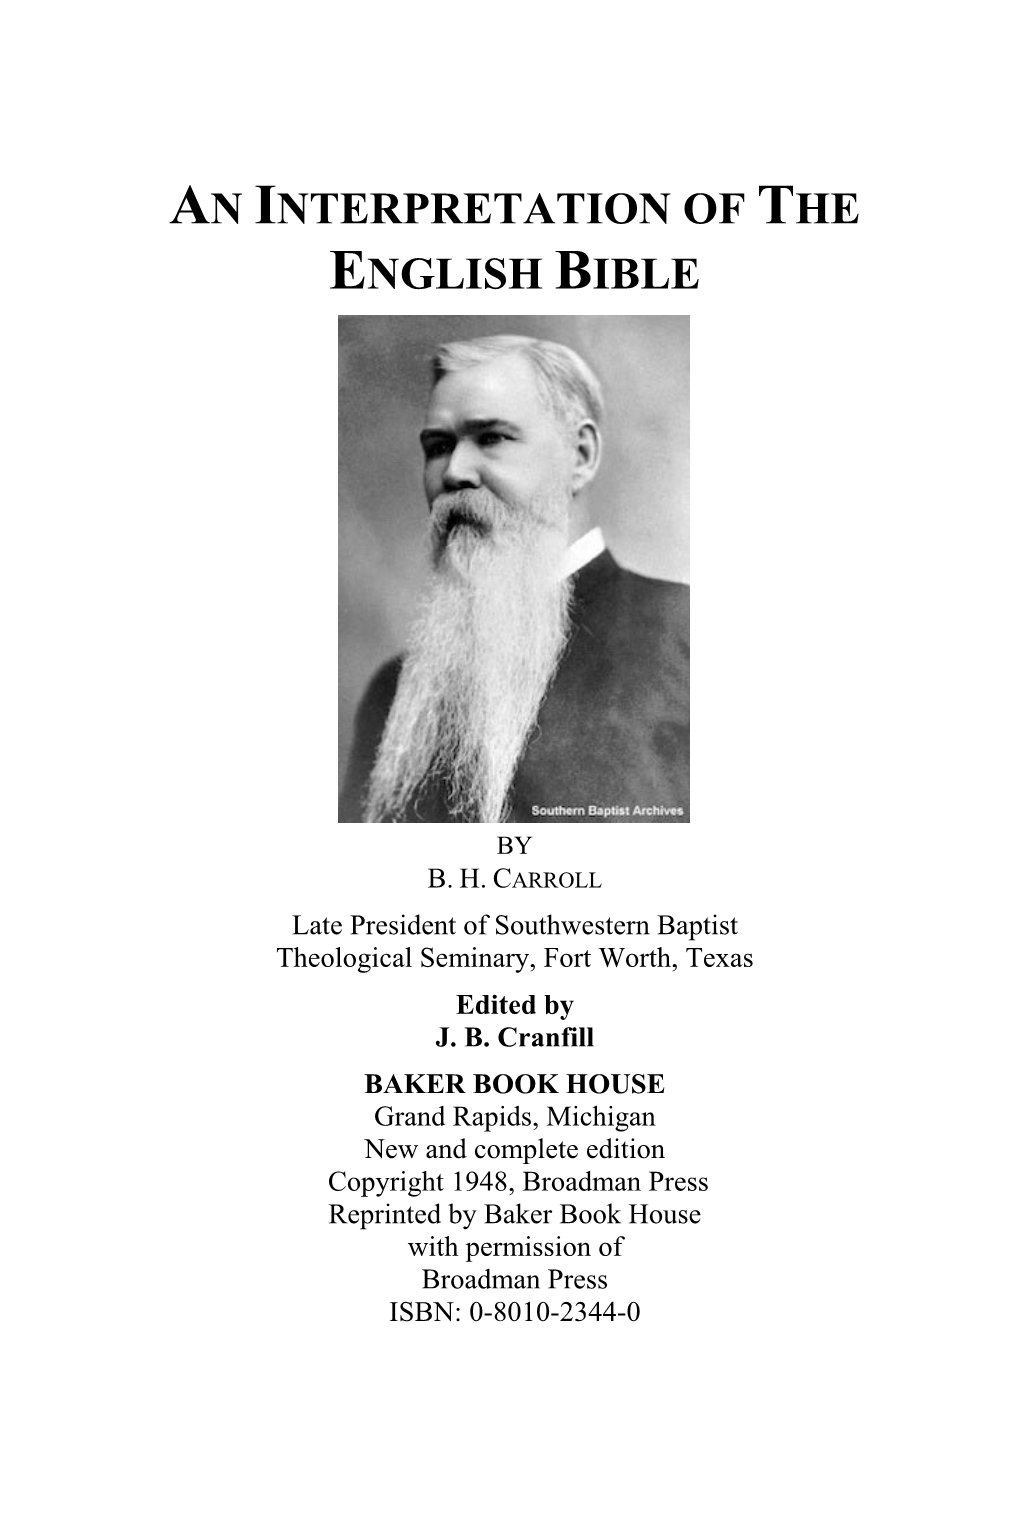 An Interpretation of the English Bible